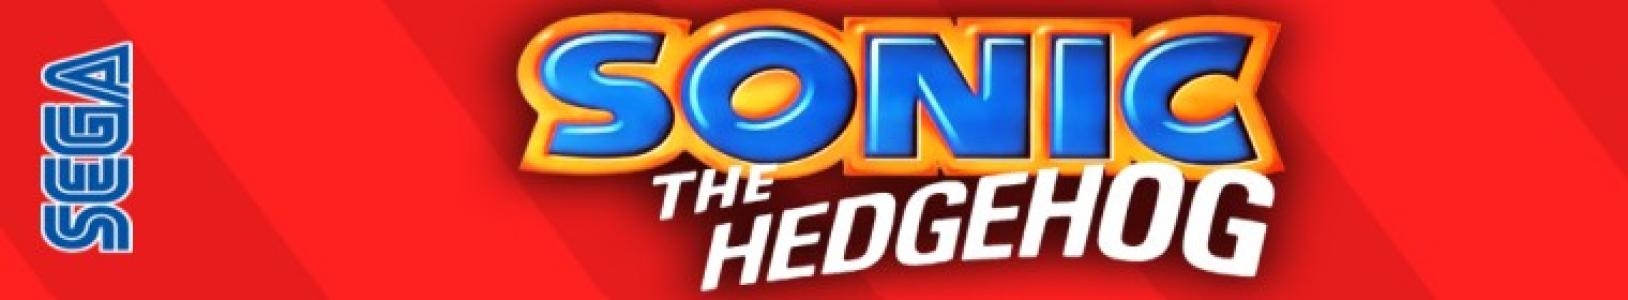 Sonic the Hedgehog banner